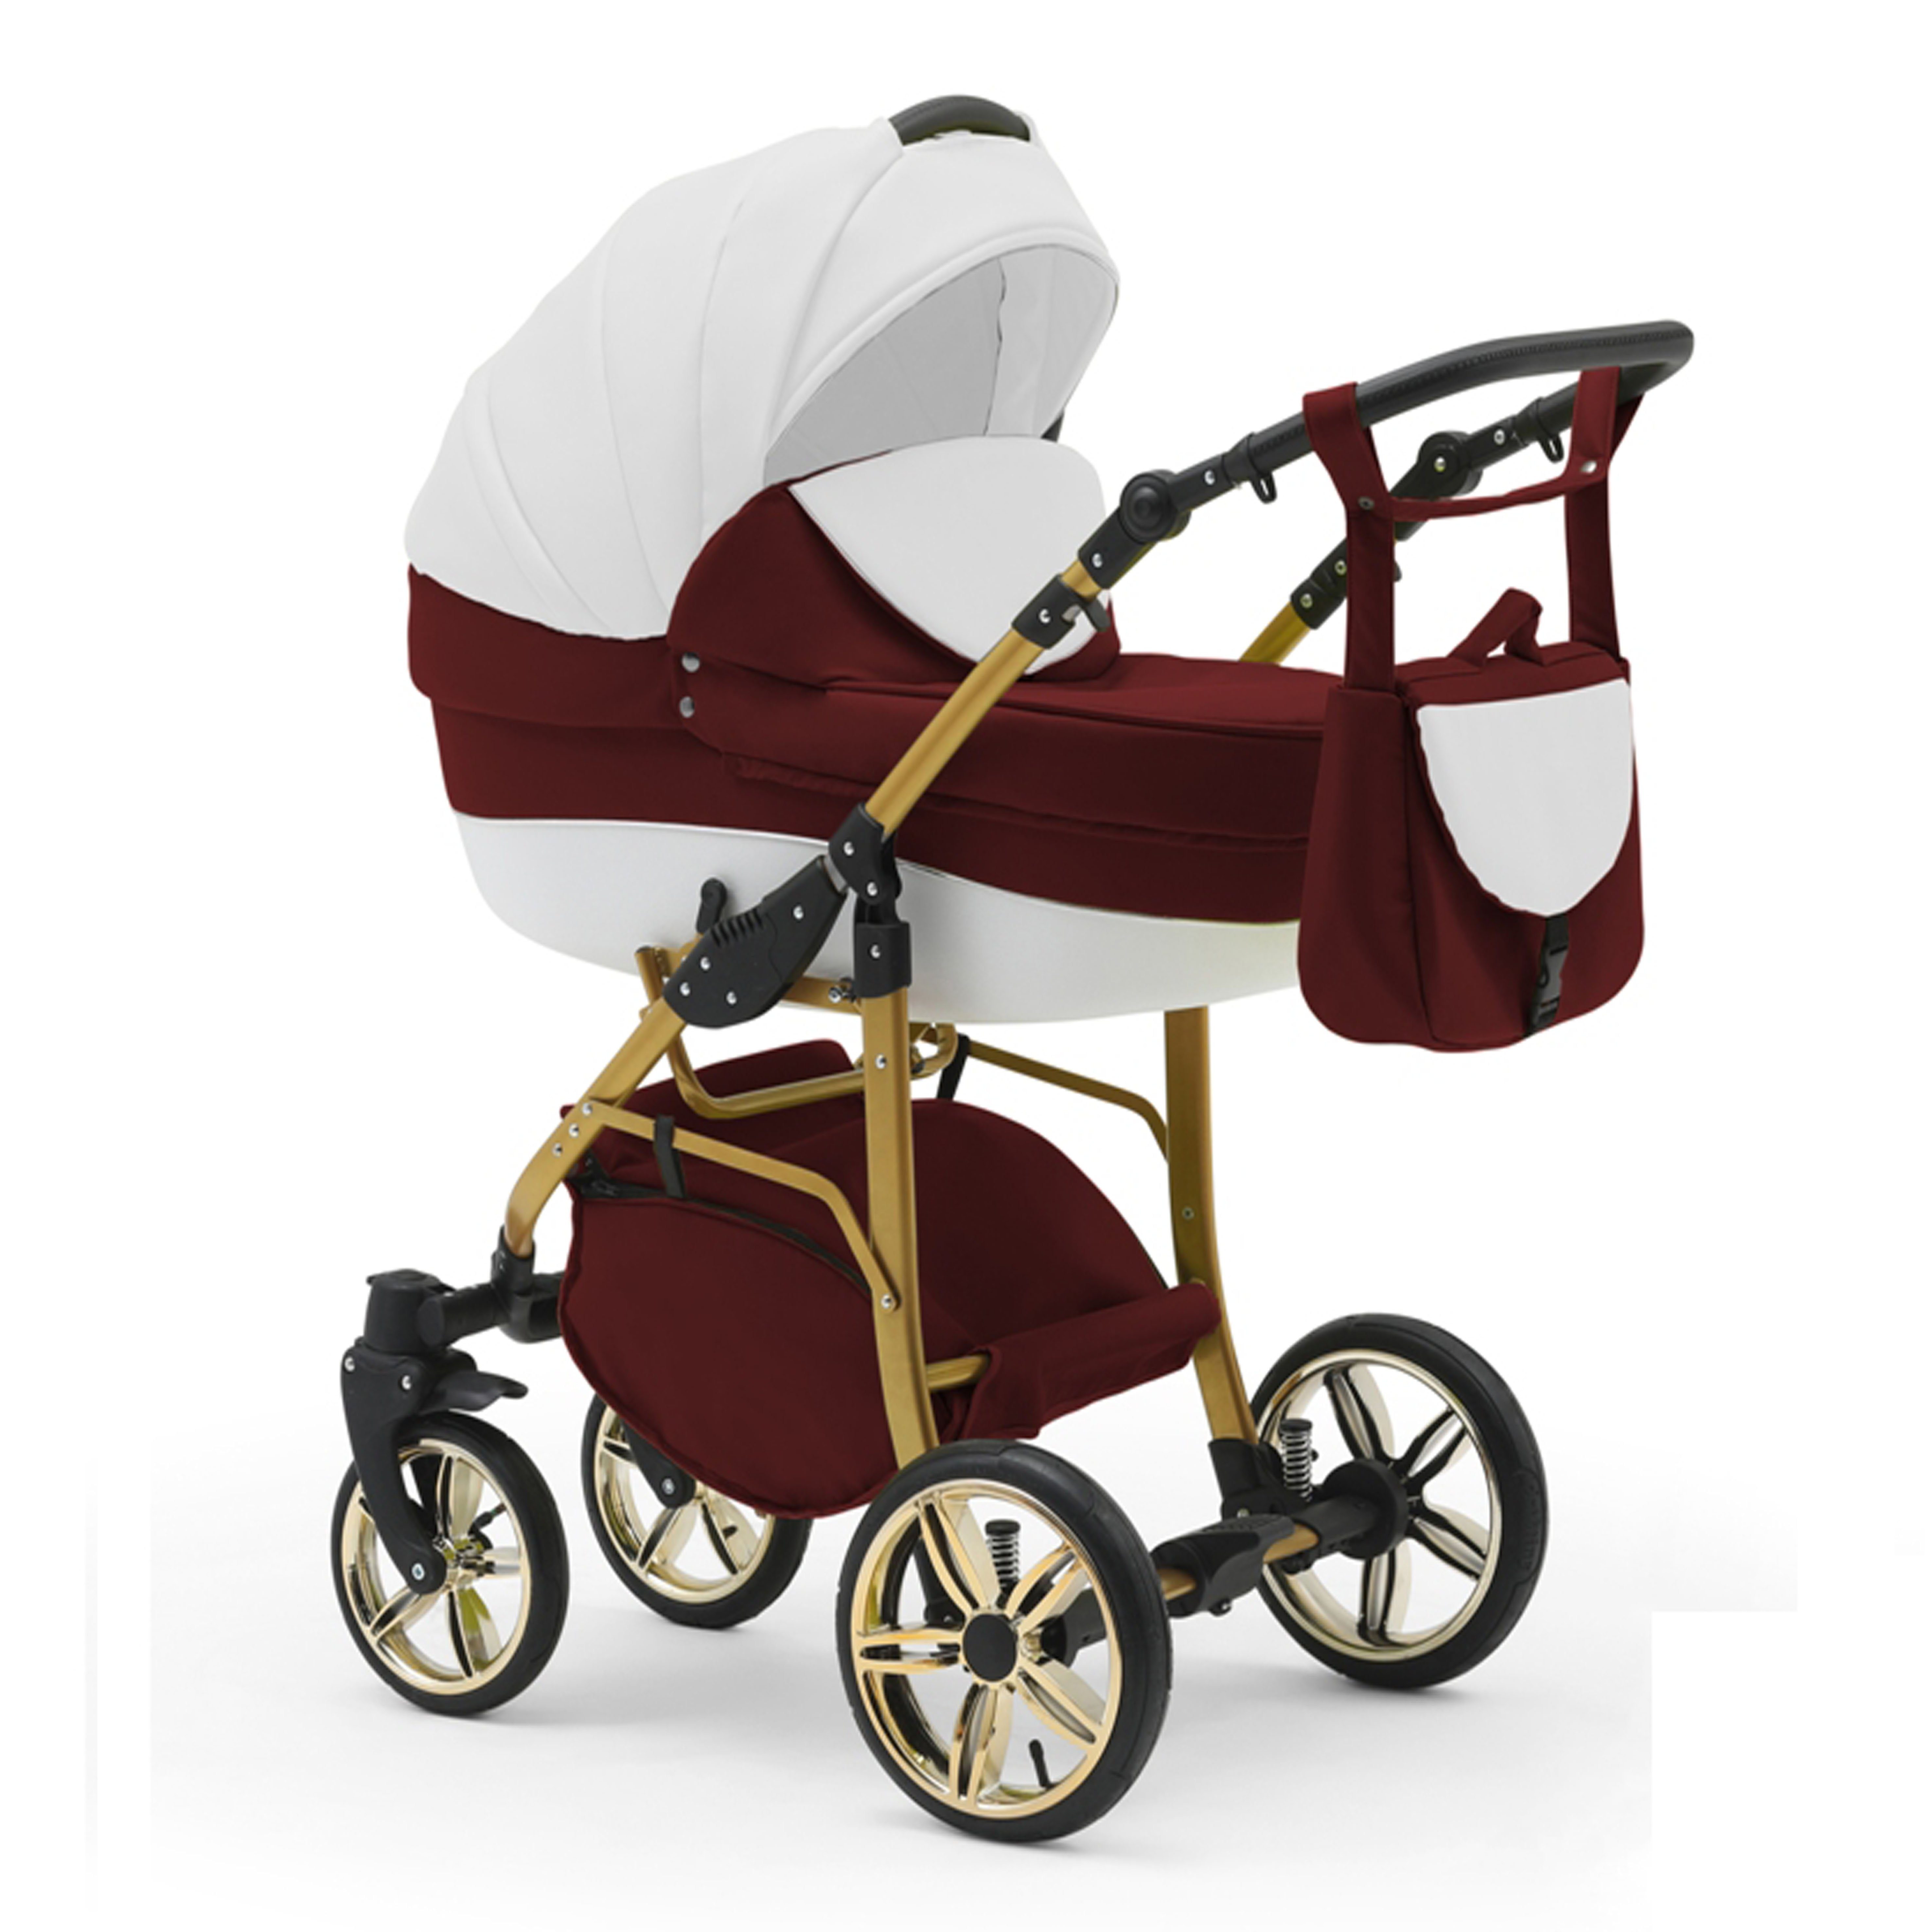 1 Cosmo - ECO 46 in in Teile Weiß-Bordeaux-Weiß Farben Gold babies-on-wheels - Kinderwagen-Set Kombi-Kinderwagen 13 2